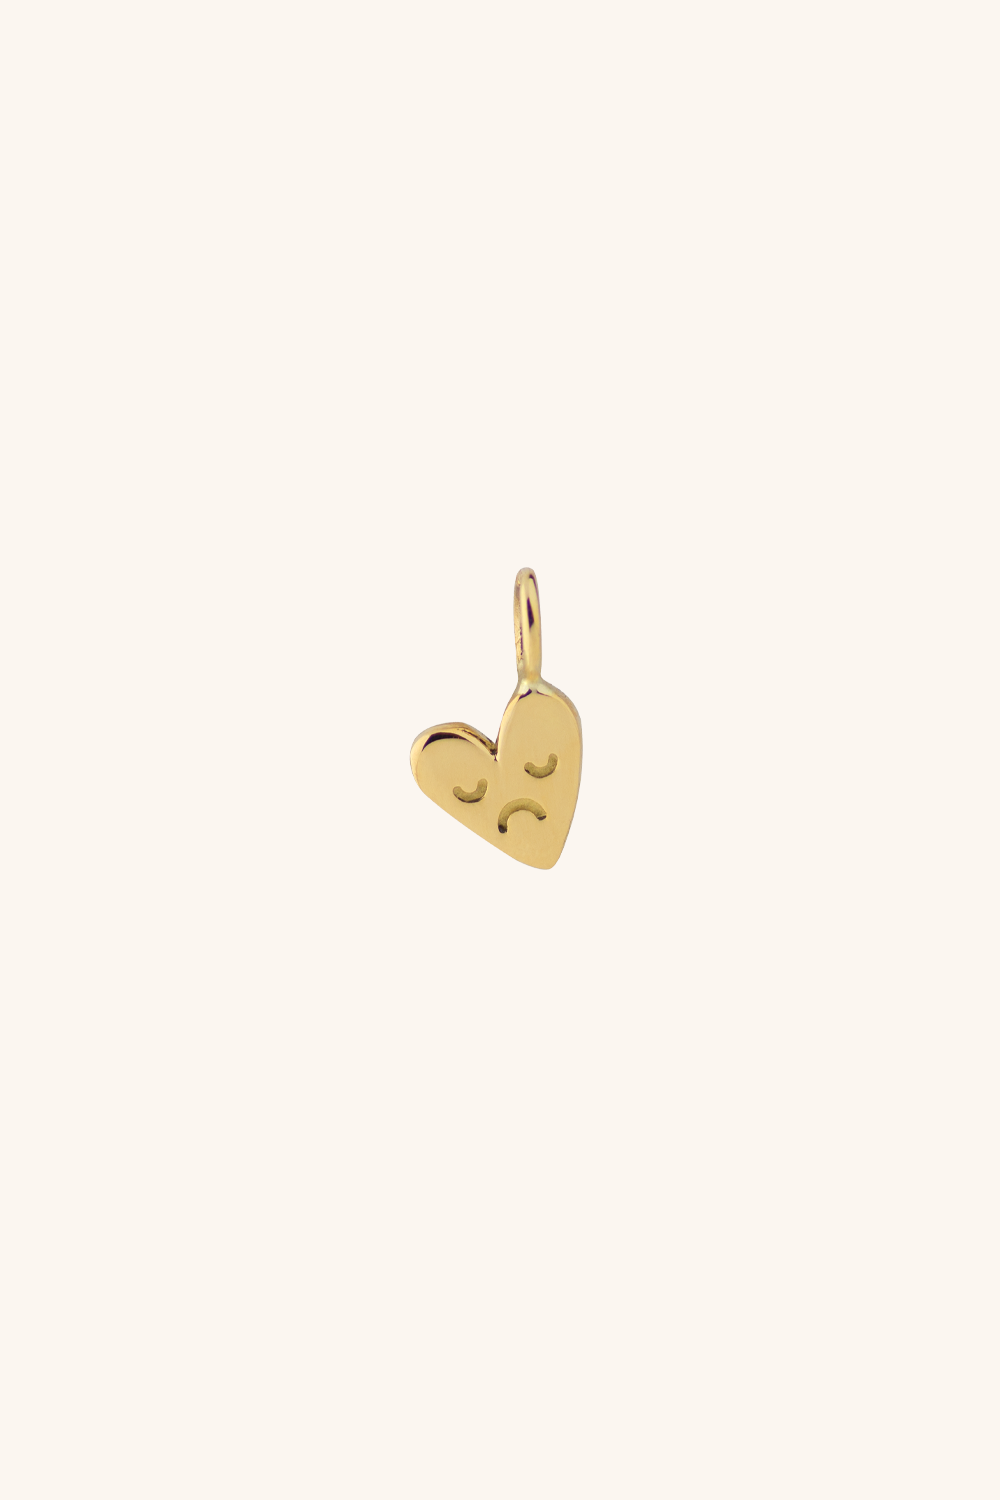 The Fine Gold Mini Mood Heart Charm